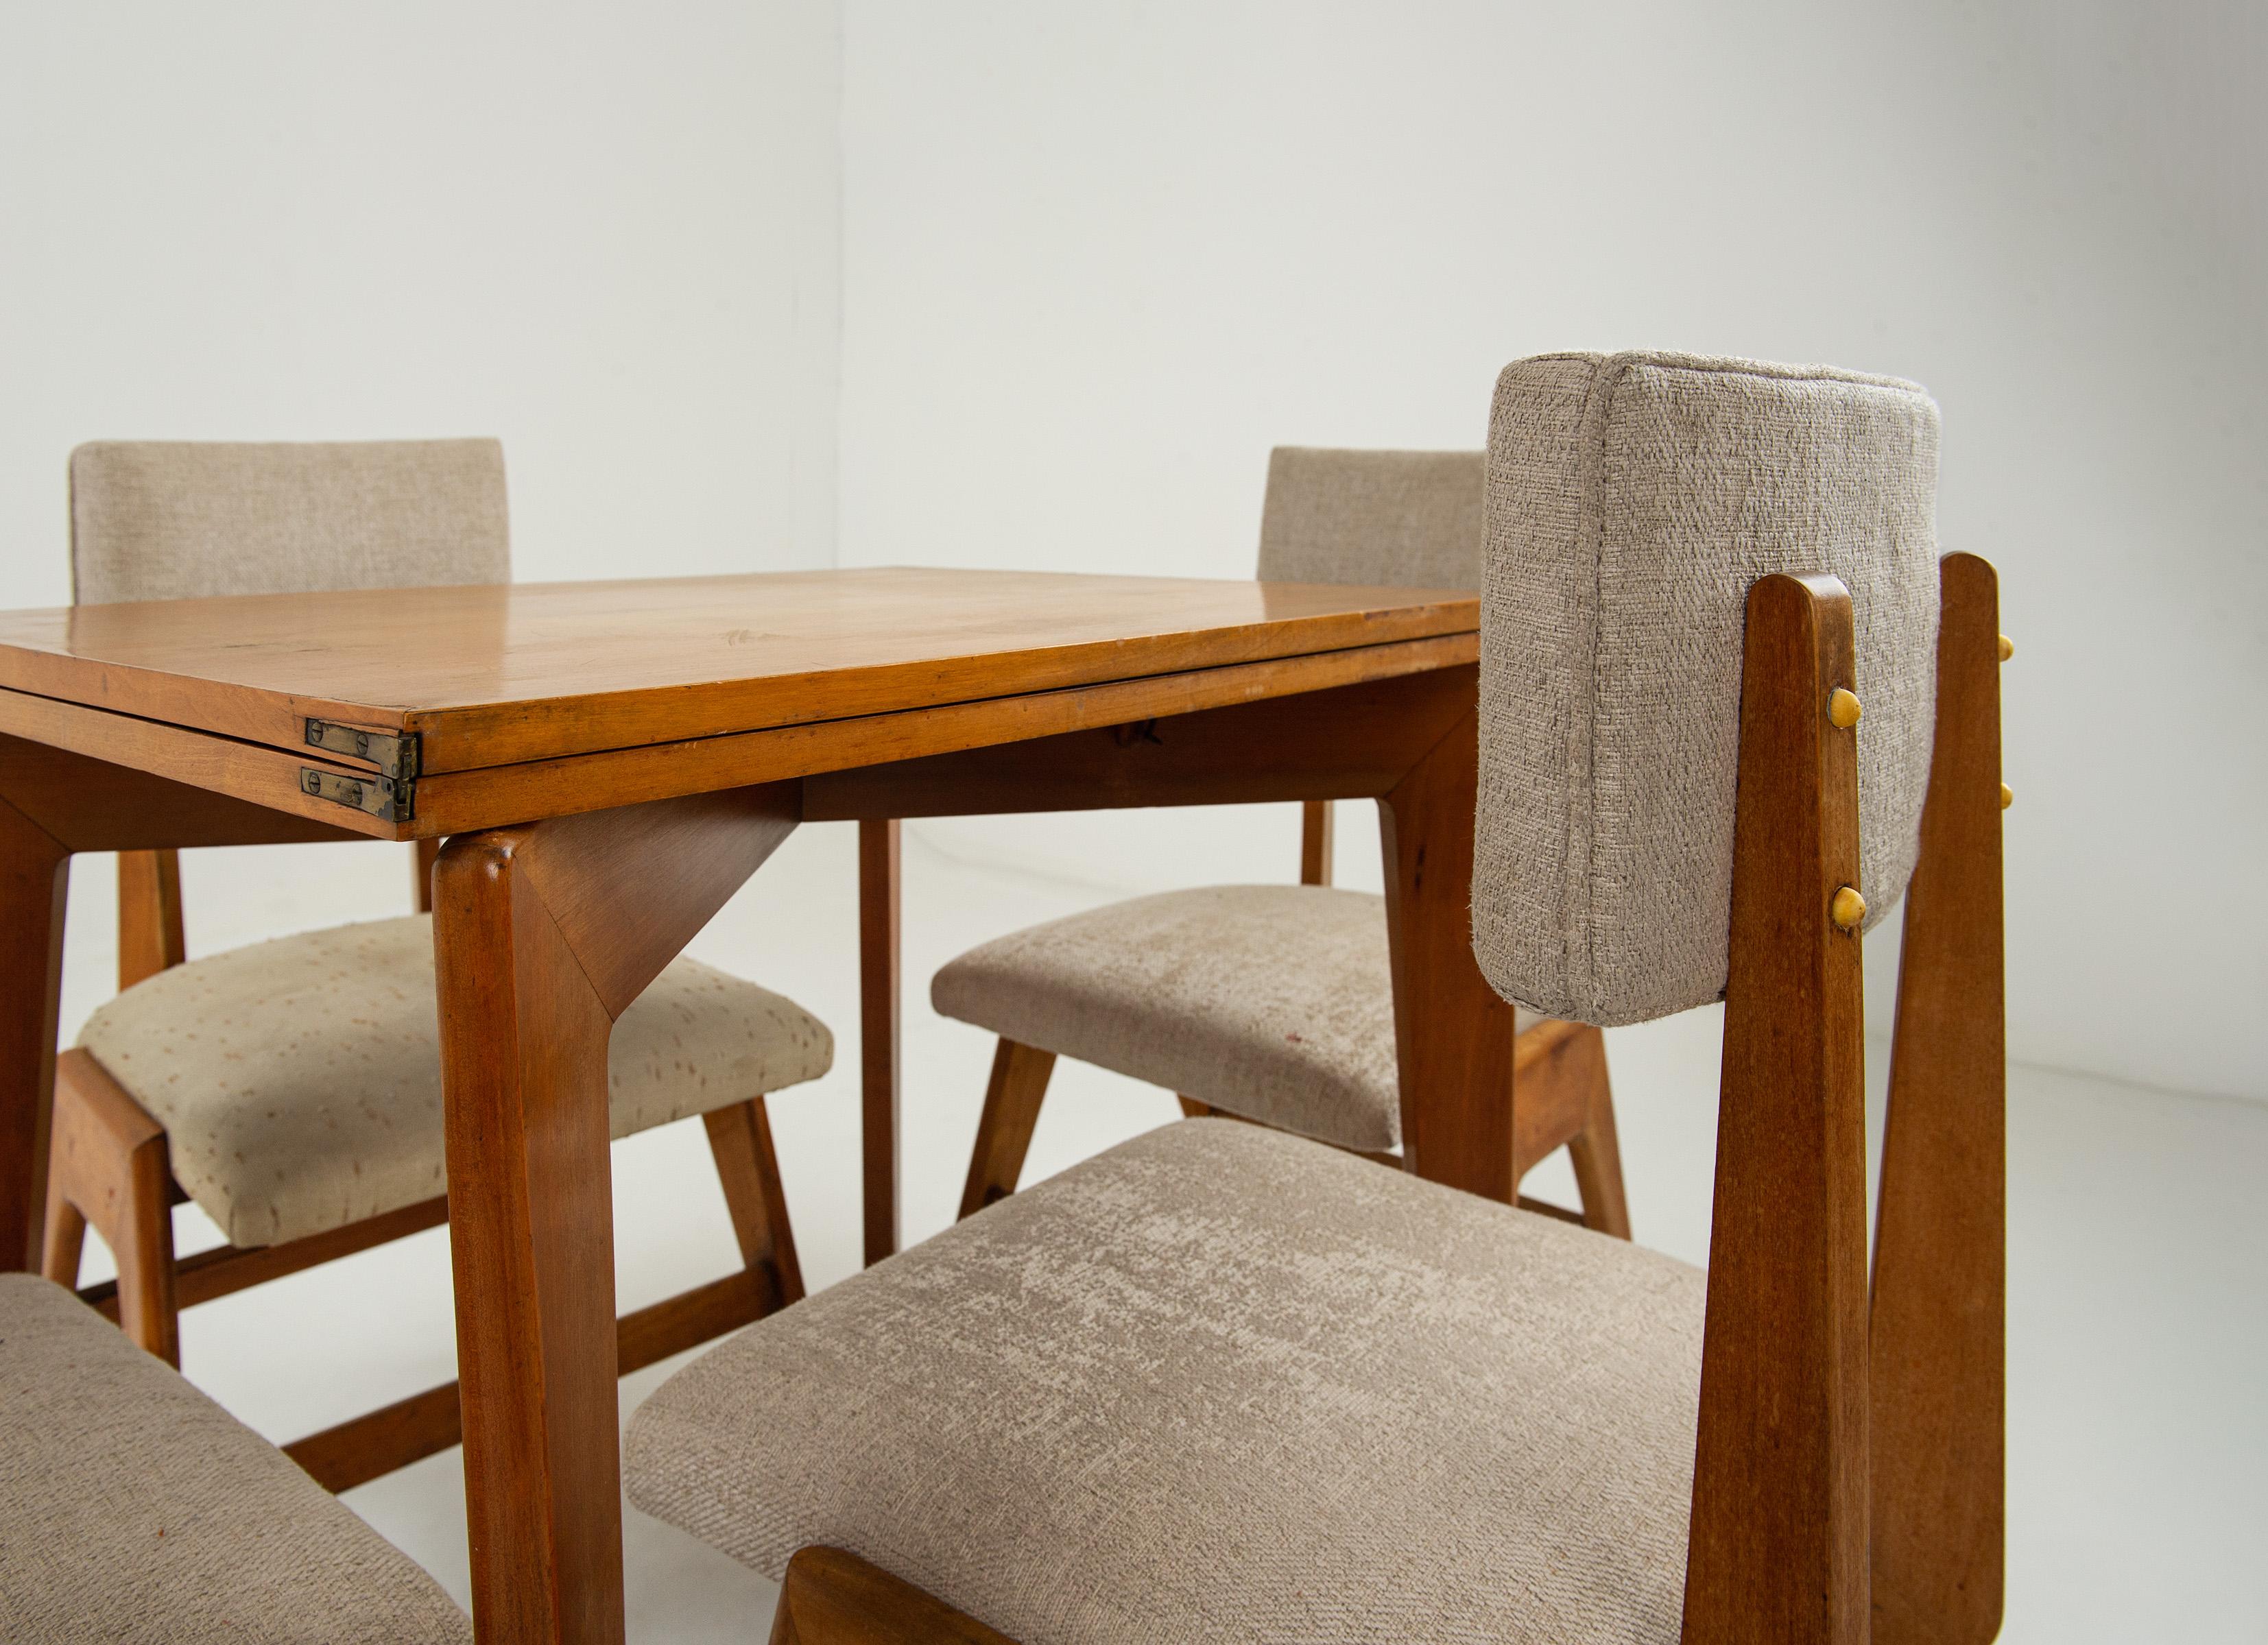 Brazilian Chairs C10 by Lina Bo Bardi